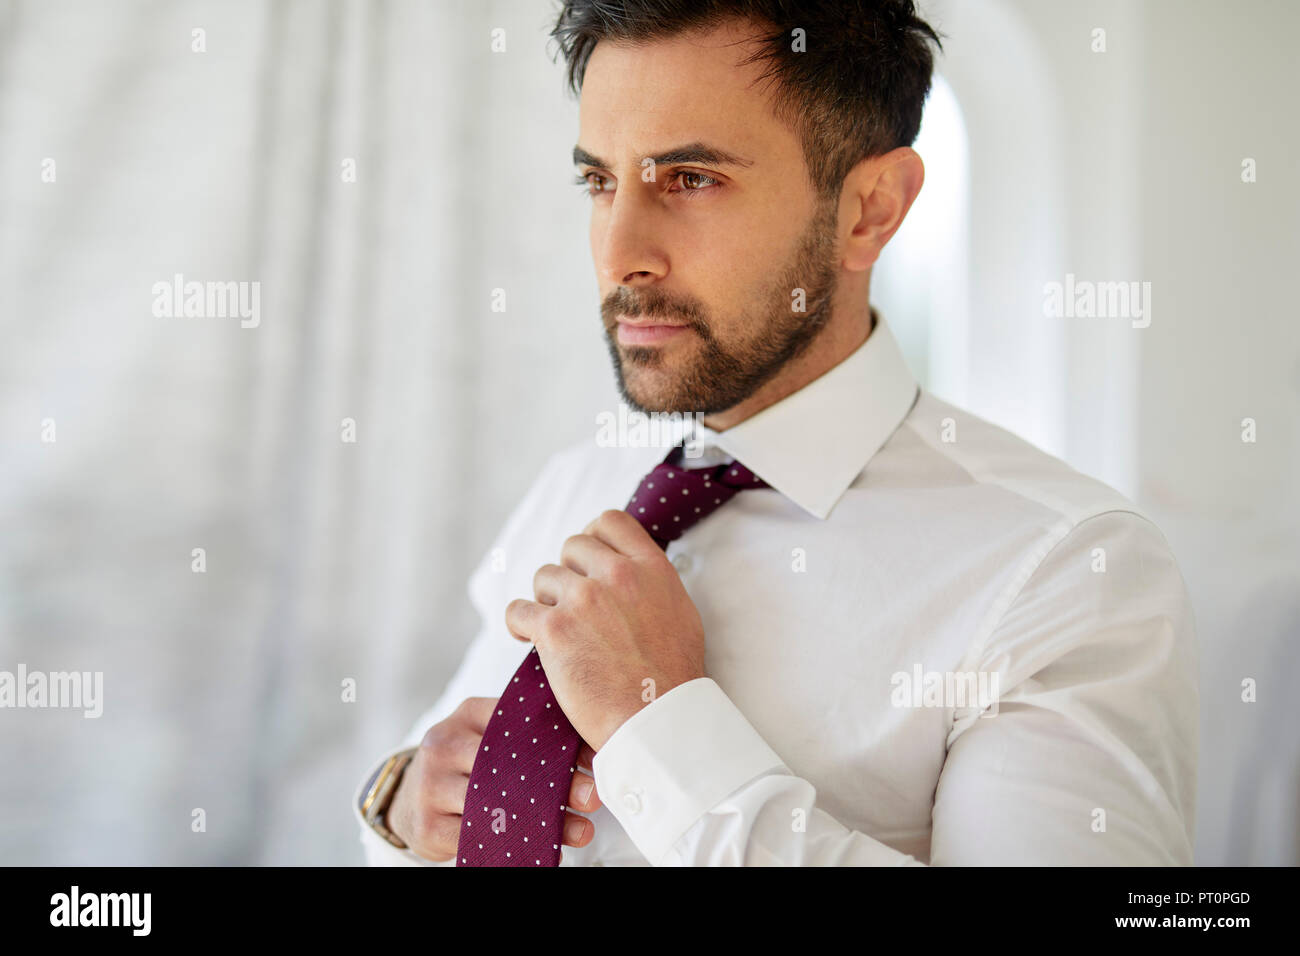 Man adjusting his tie Stock Photo